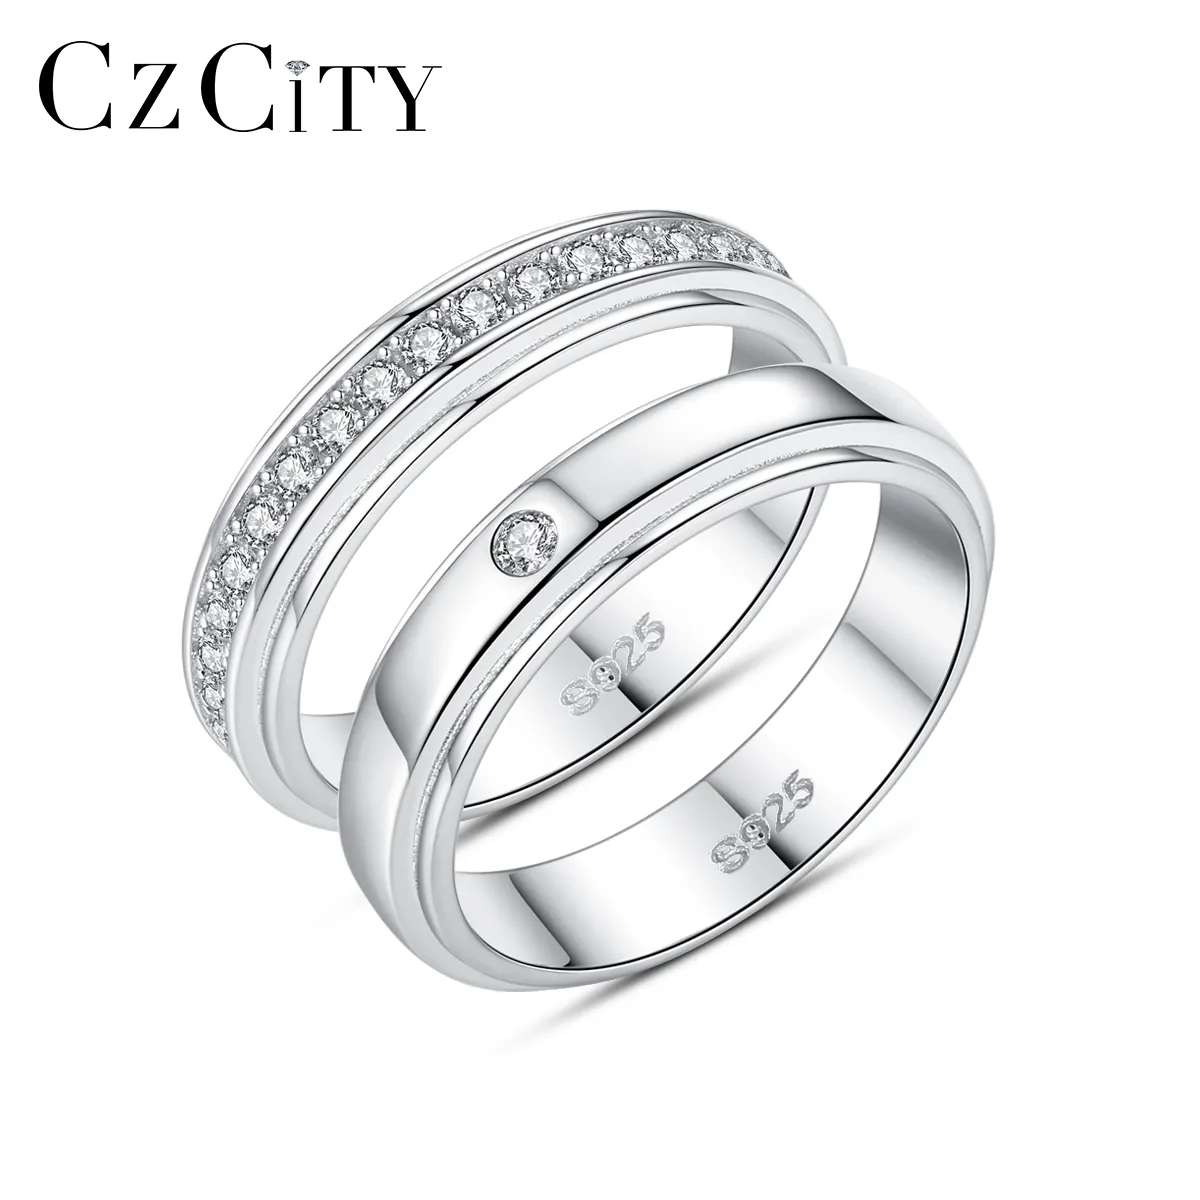 CZCITY Sterling Silber New Trendy Unique Man Verlobung Zirkonia Finger Frau Paar Ehering Set